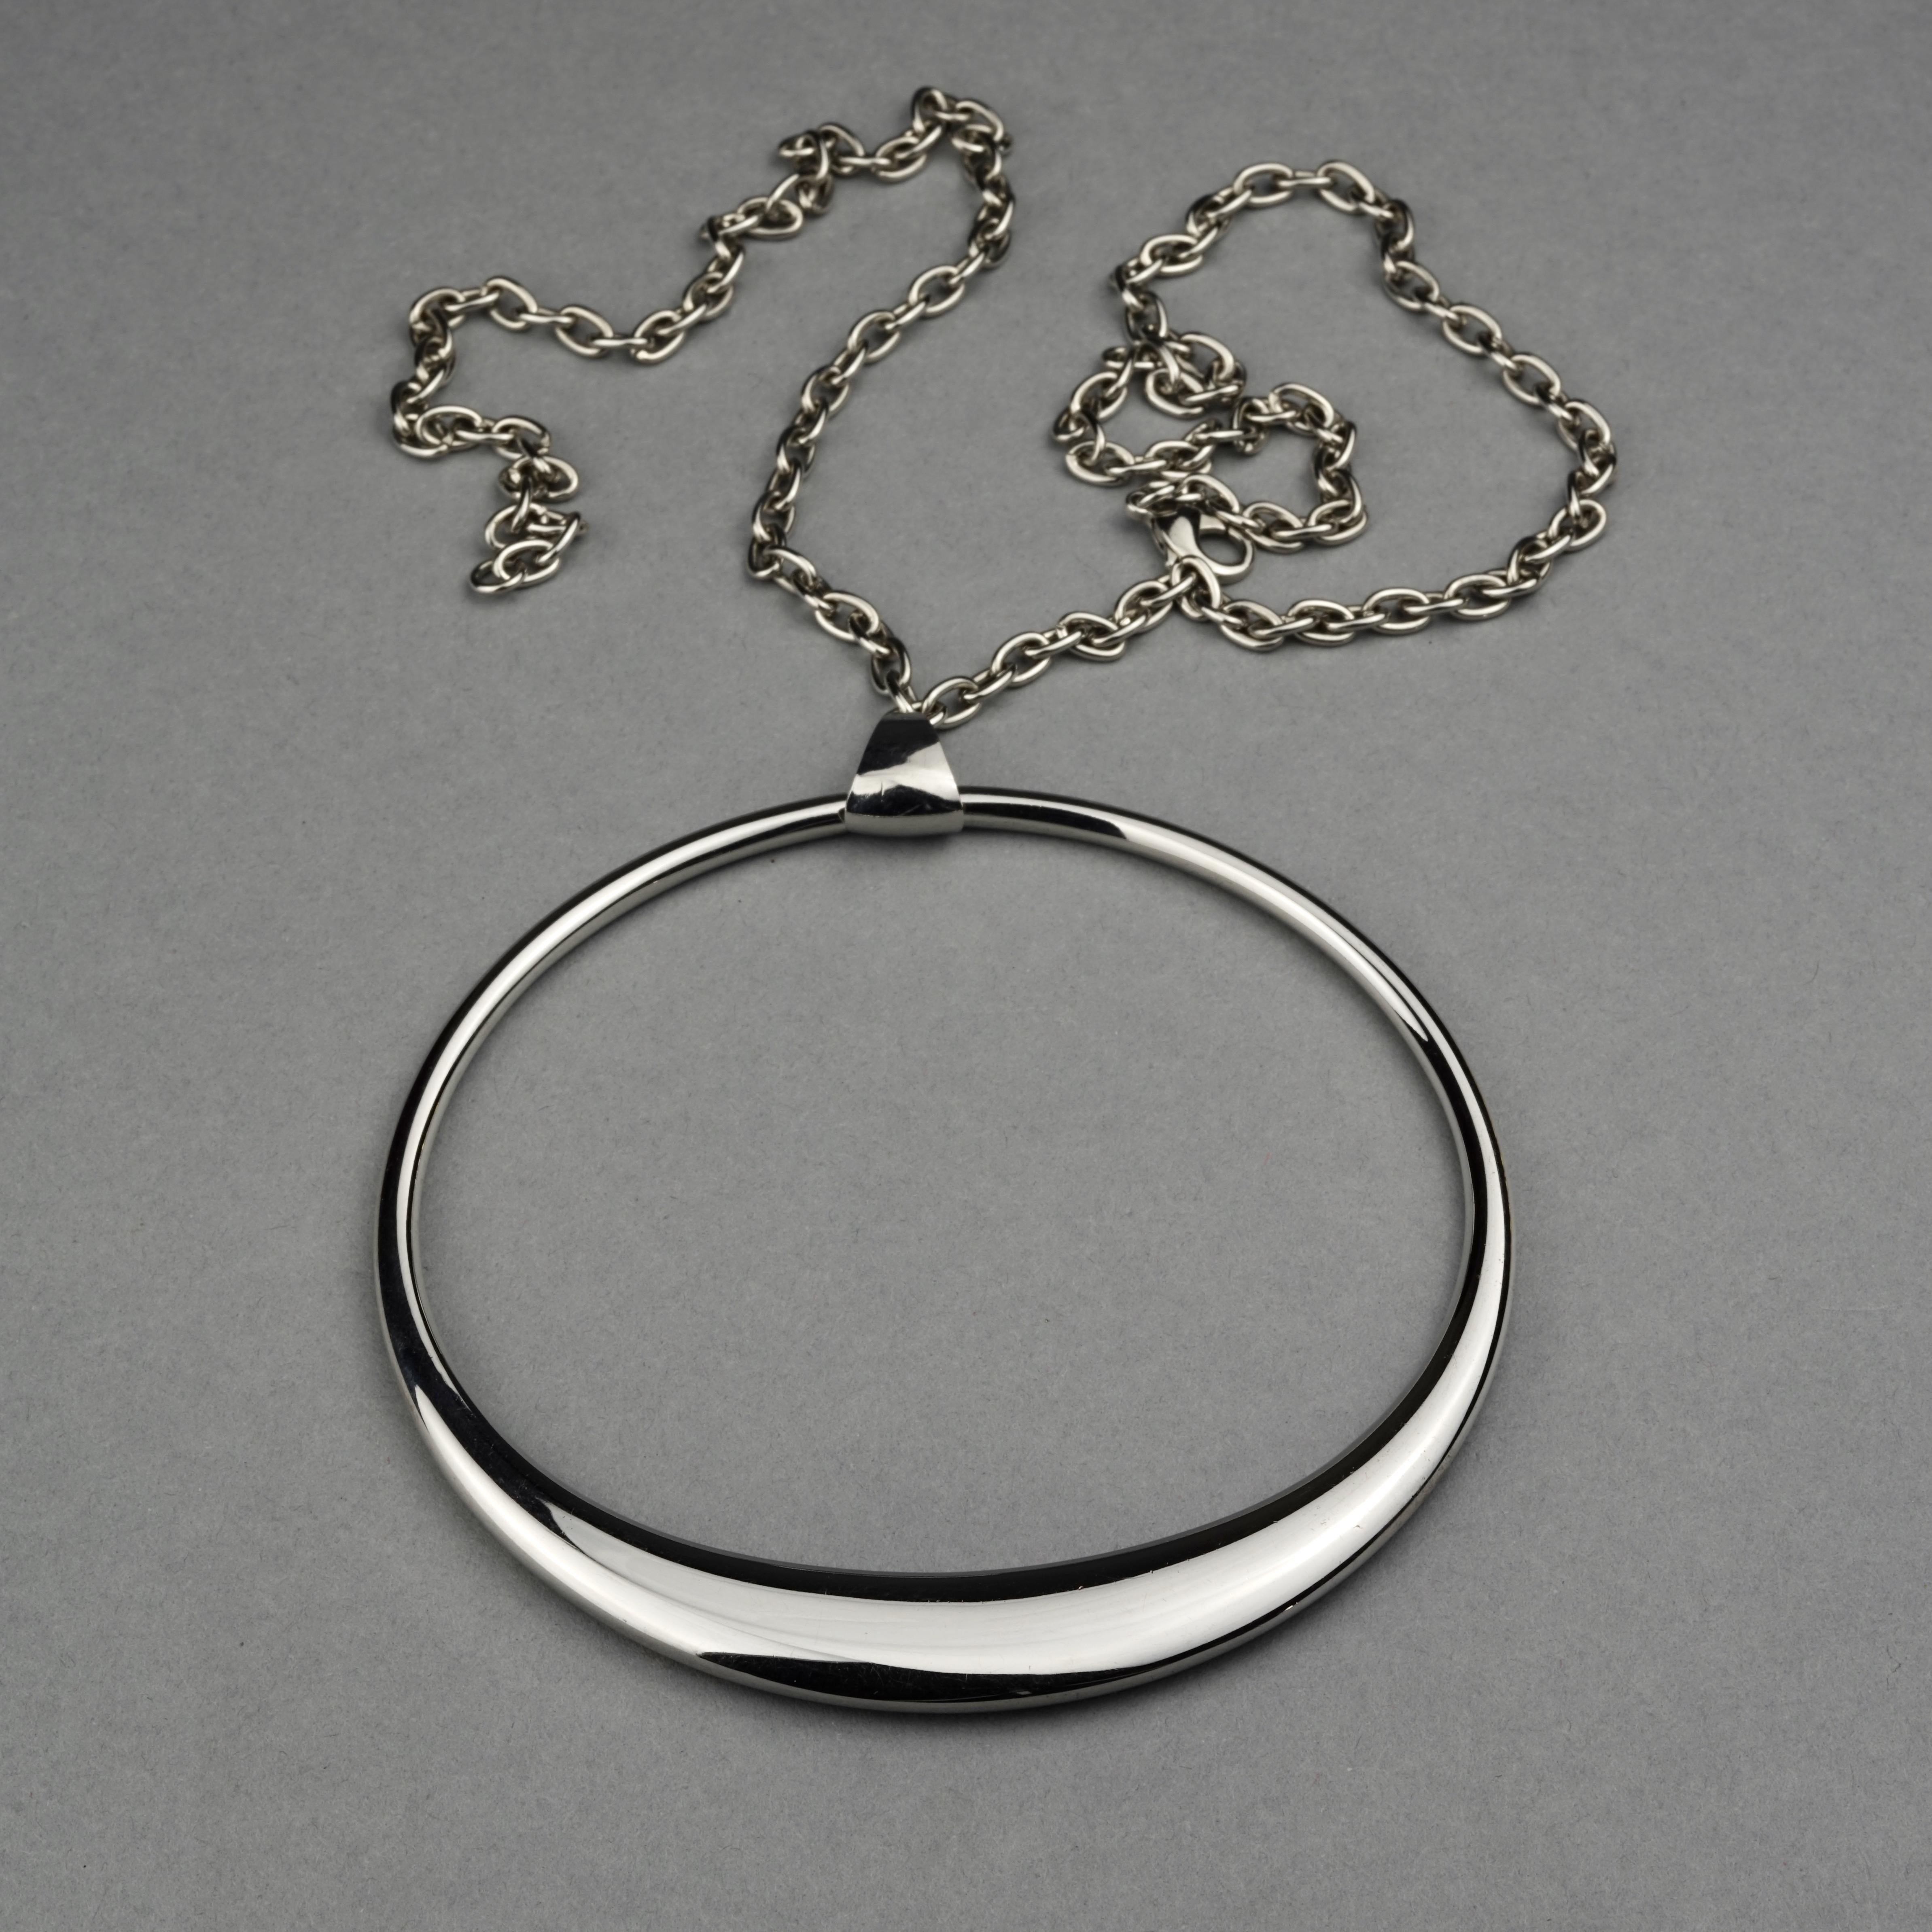 Women's Vintage Massive JEAN PAUL GAULTIER Modernist Ring Pendant Silver Chain Necklace